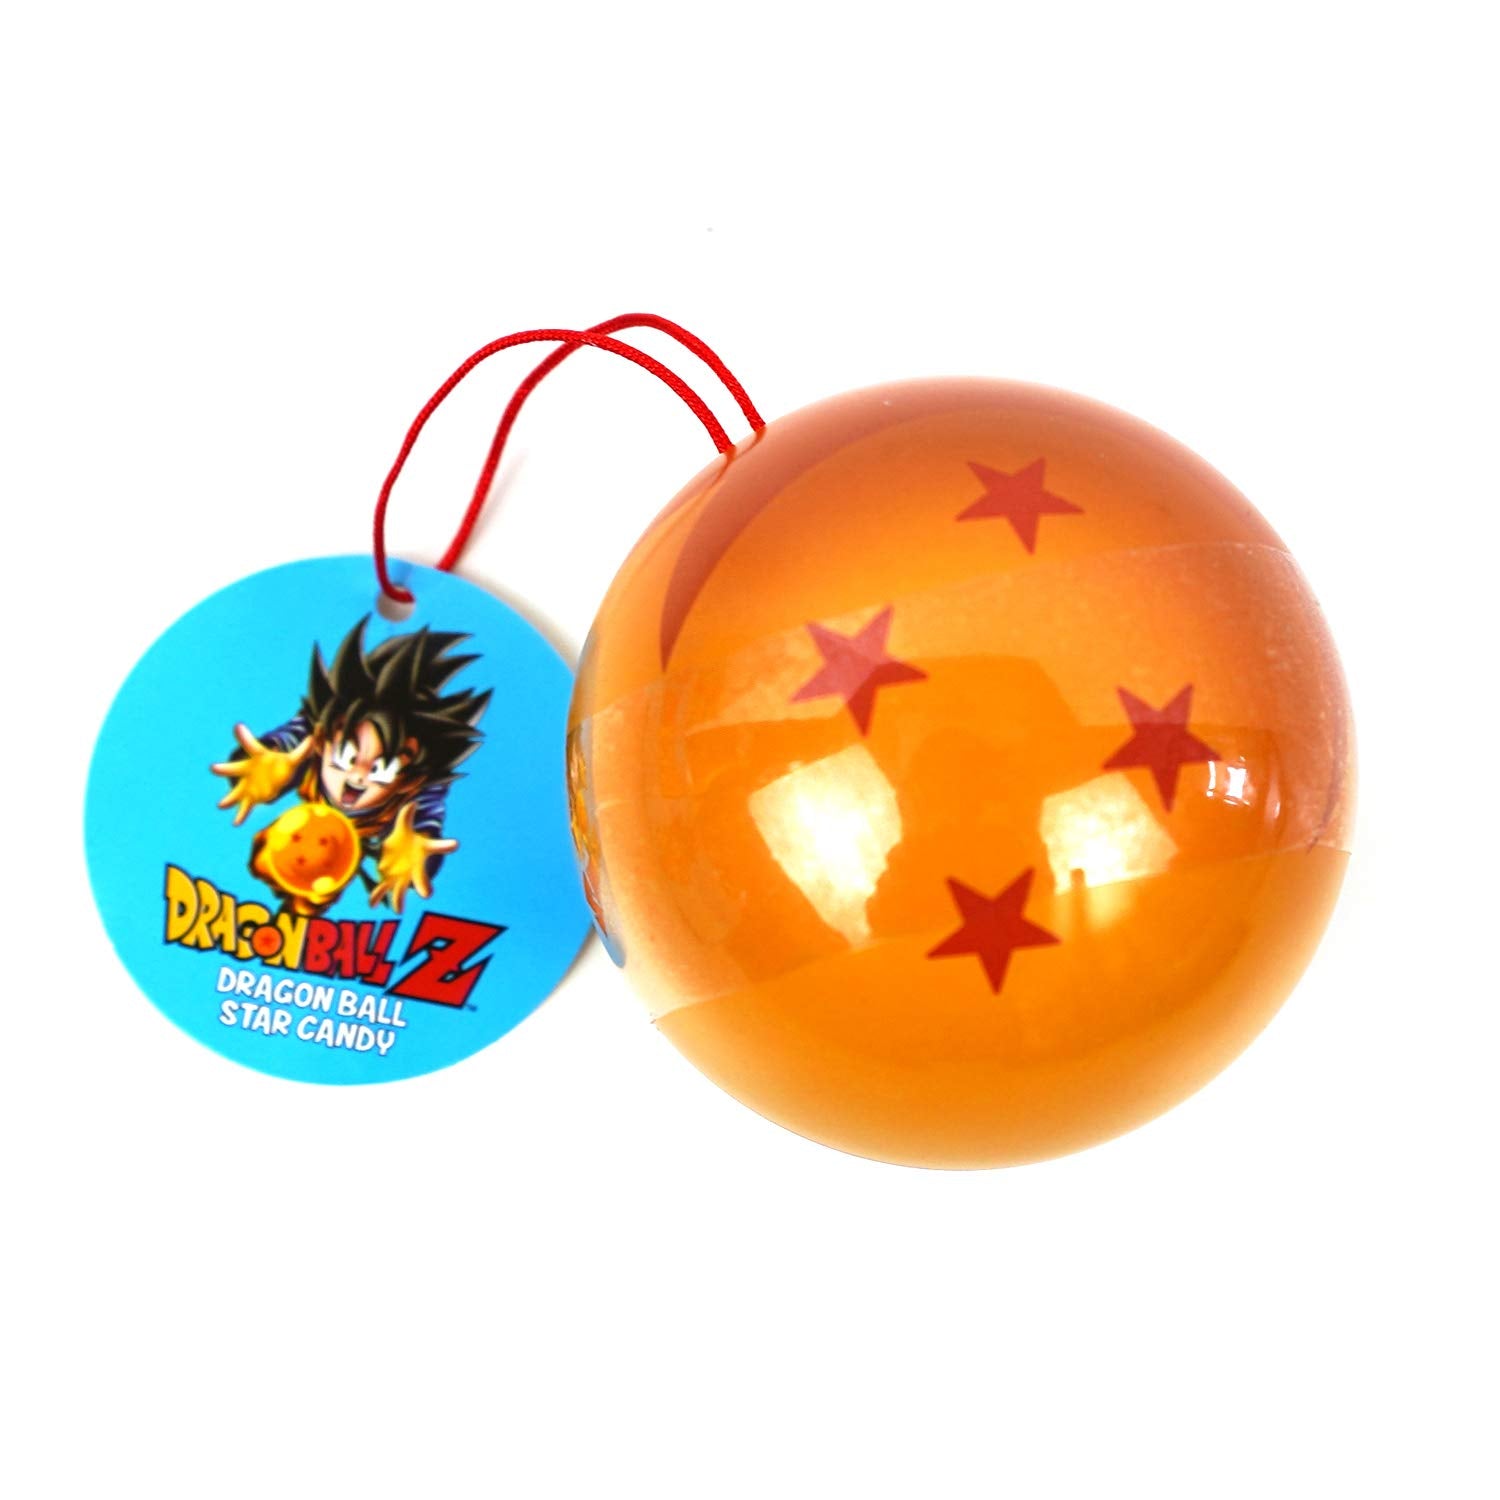 Dragonball Z Dragon Ball Star Candy Tin Star Shaped Candy 2 Pack St Gosu Toys